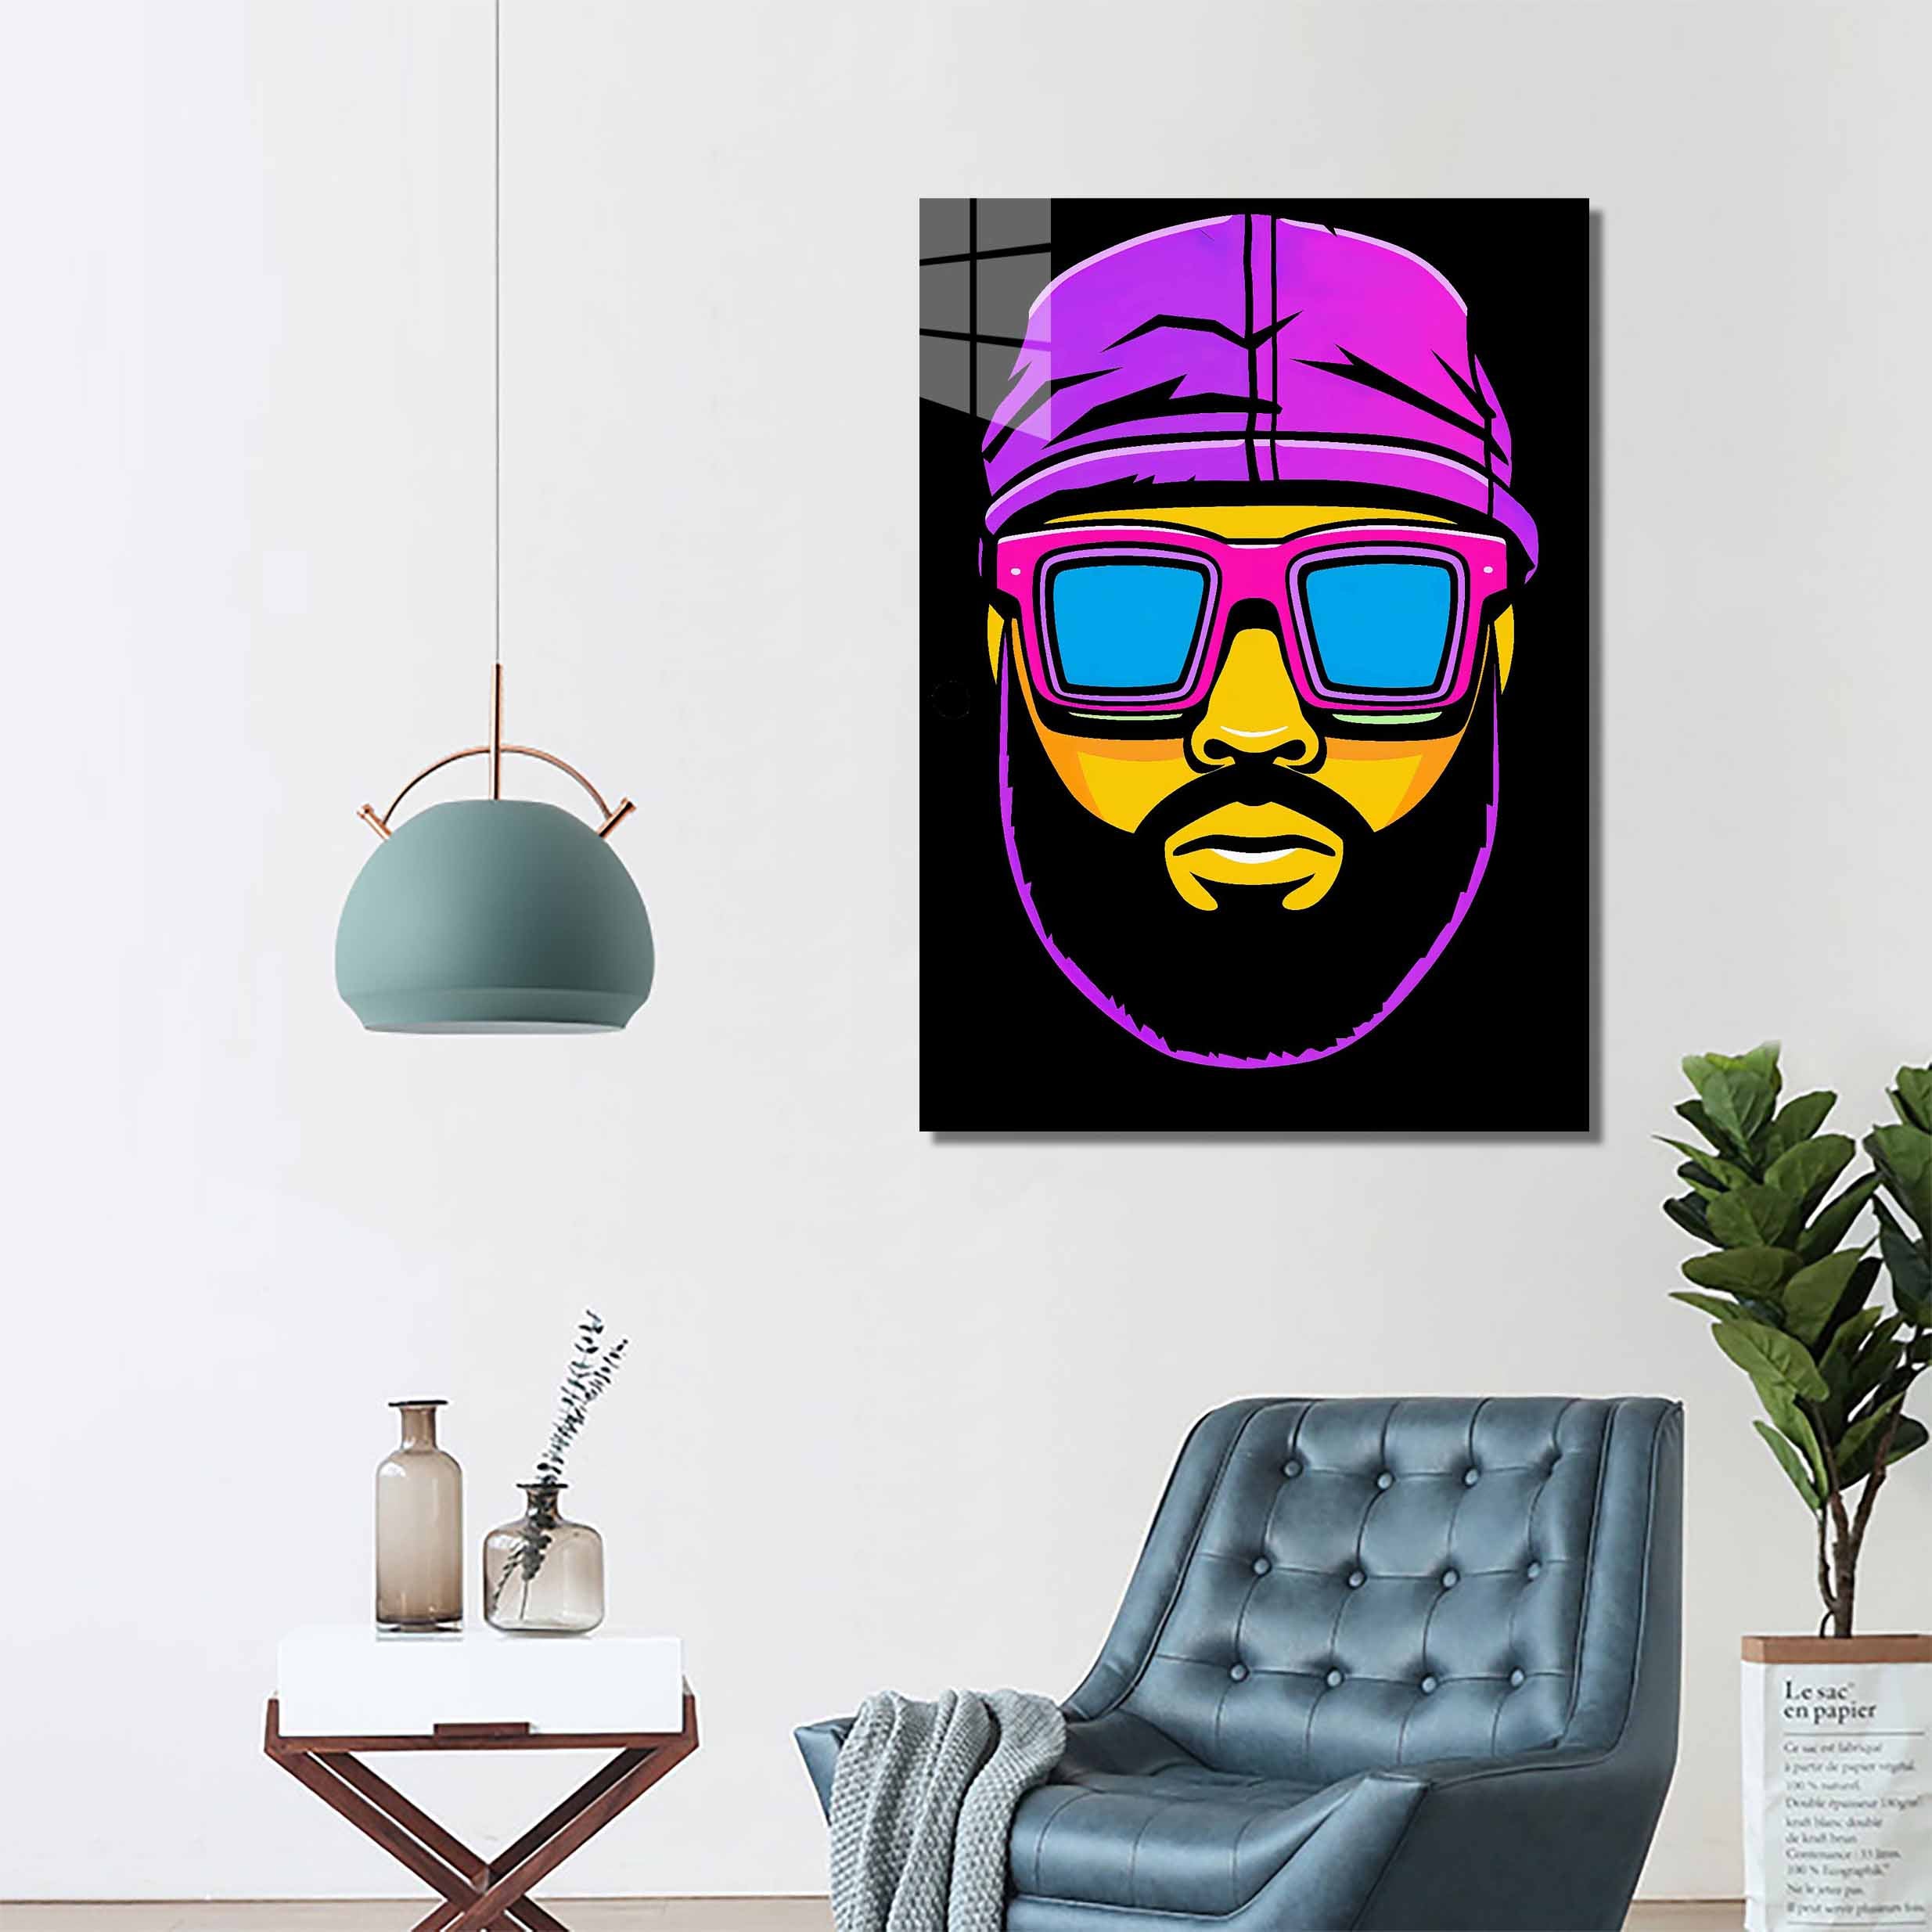 Ice Cube Rapper-designed by @WATON CORET